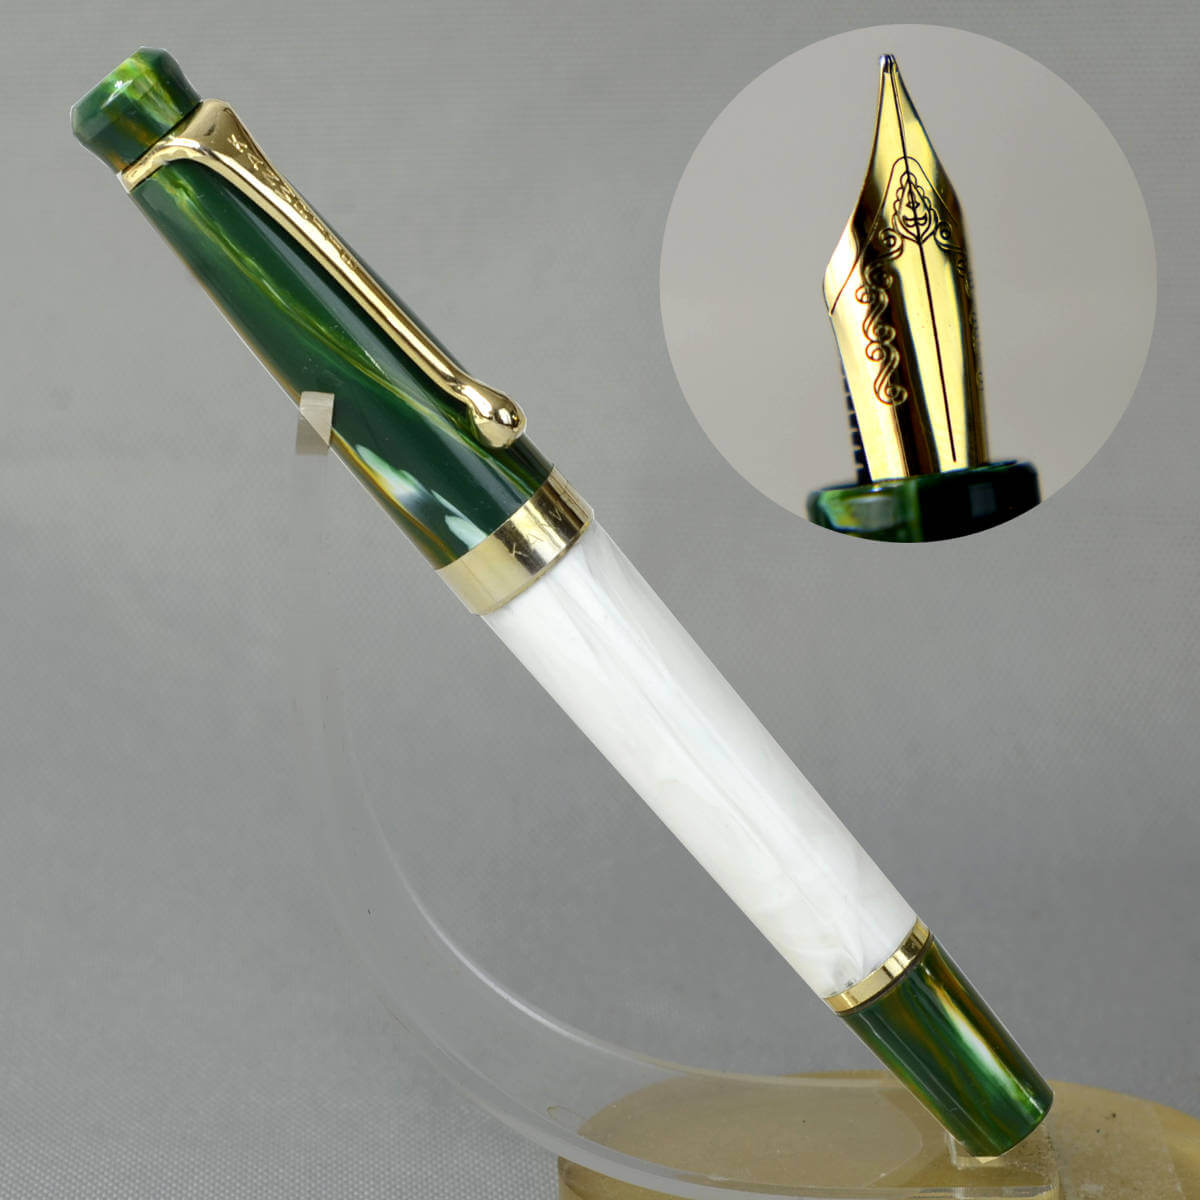 Buy Kanwrite gold nib heritage piston filler fountain pen with 14K